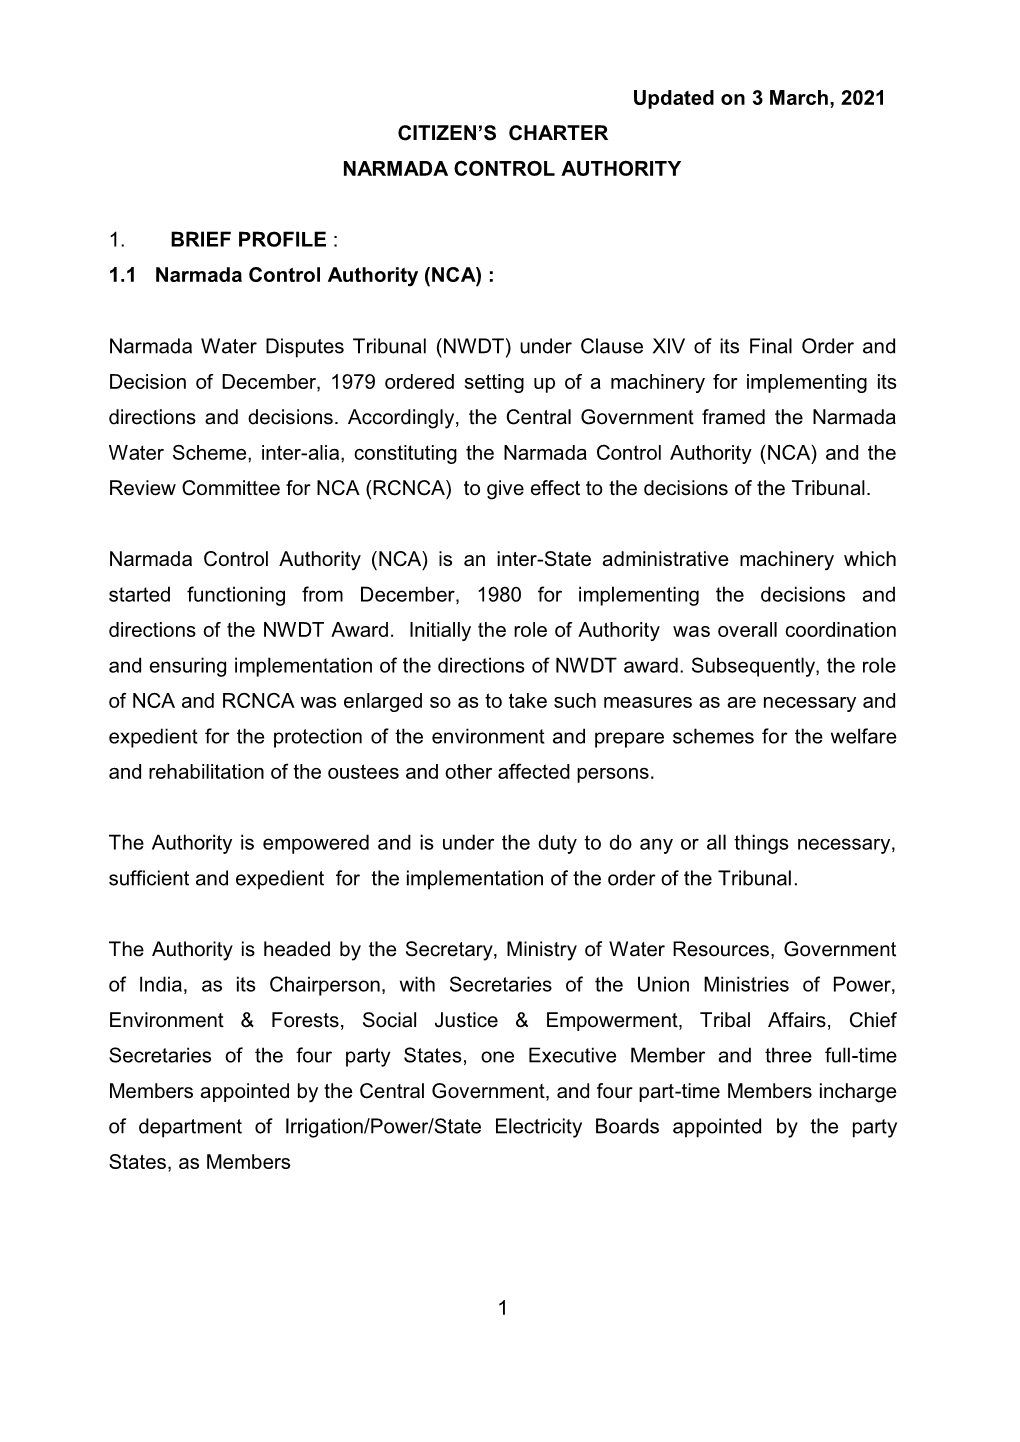 Citizen's Charter of Narmada Control Authority (Nca)